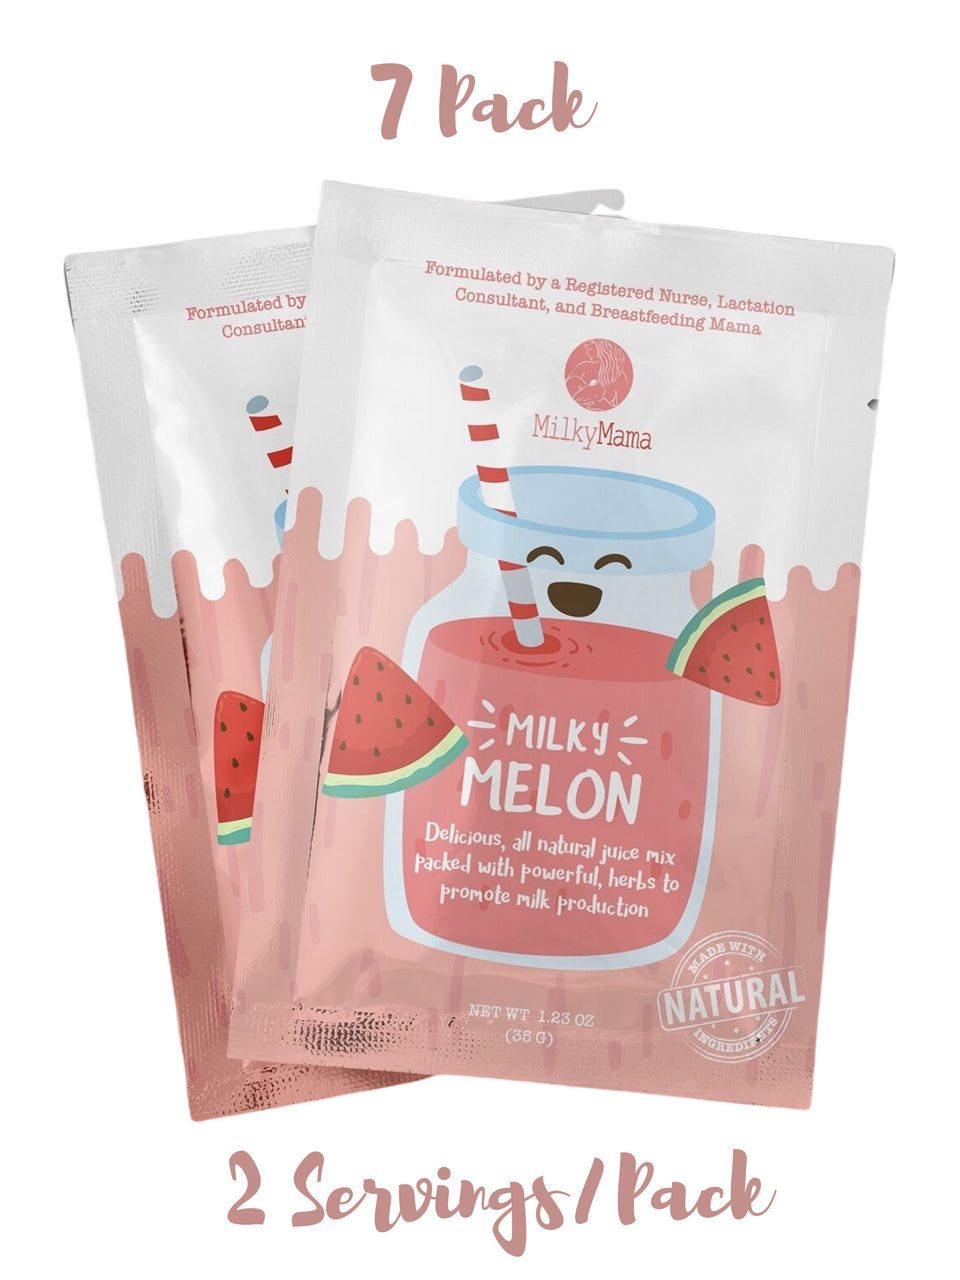 Milky Melon - 7 Pack